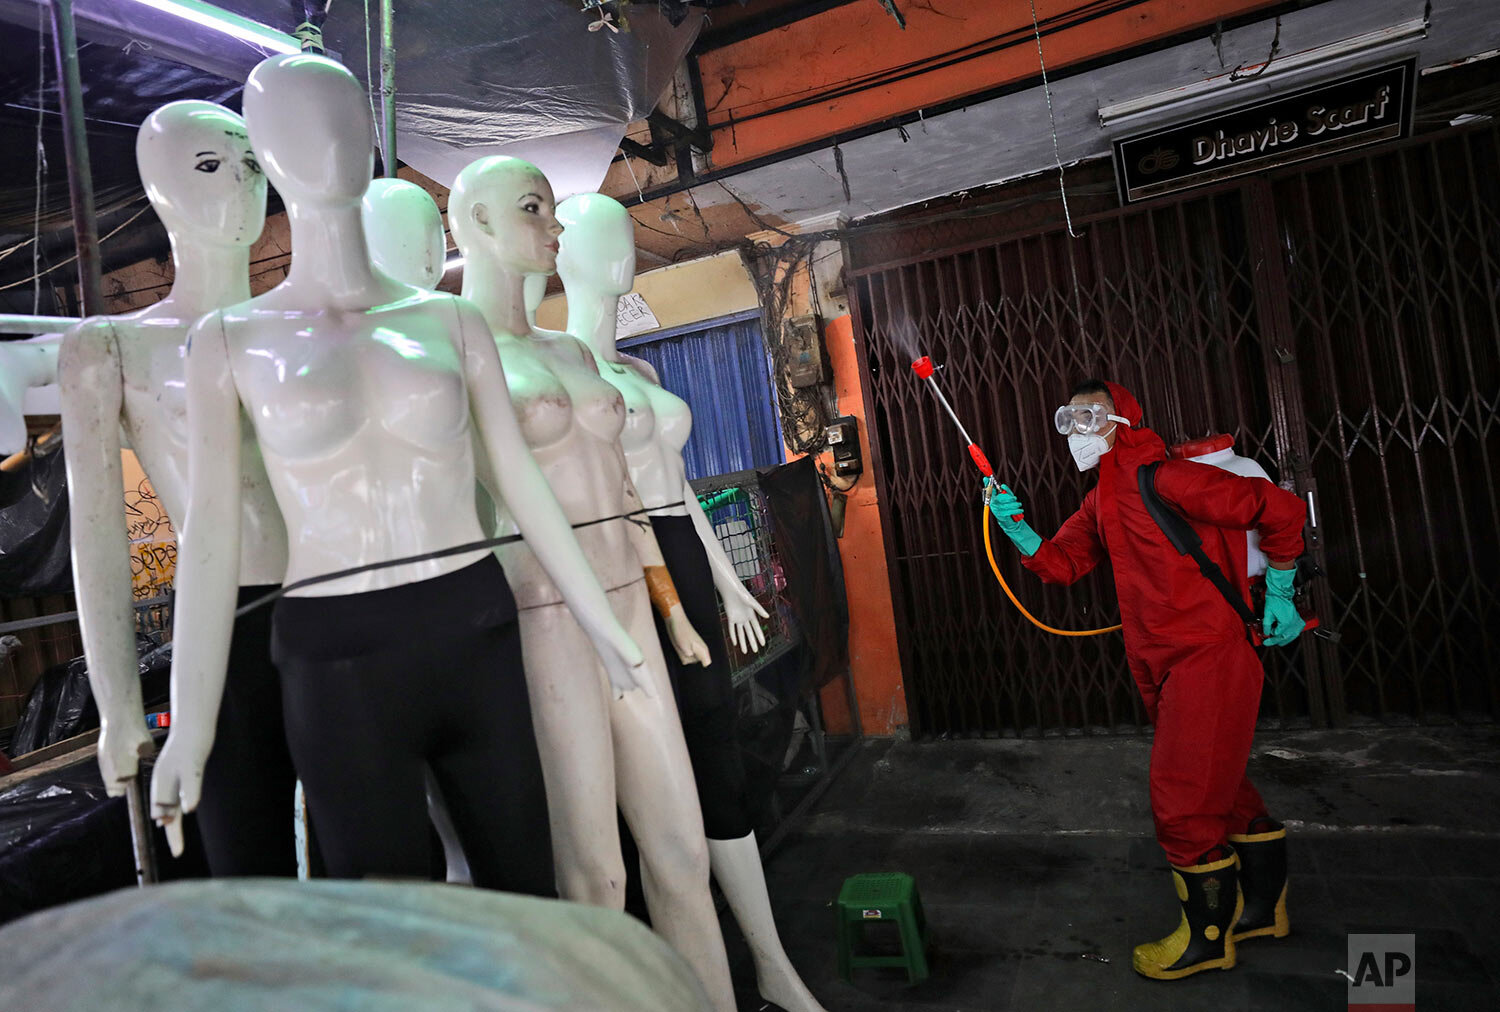  A fireman sprays disinfectant at mannequins as a precaution against the coronavirus  at Tanah Abang textile market in Jakarta, Indonesia, Thursday, June 4, 2020. (AP Photo/Dita Alangkara) 